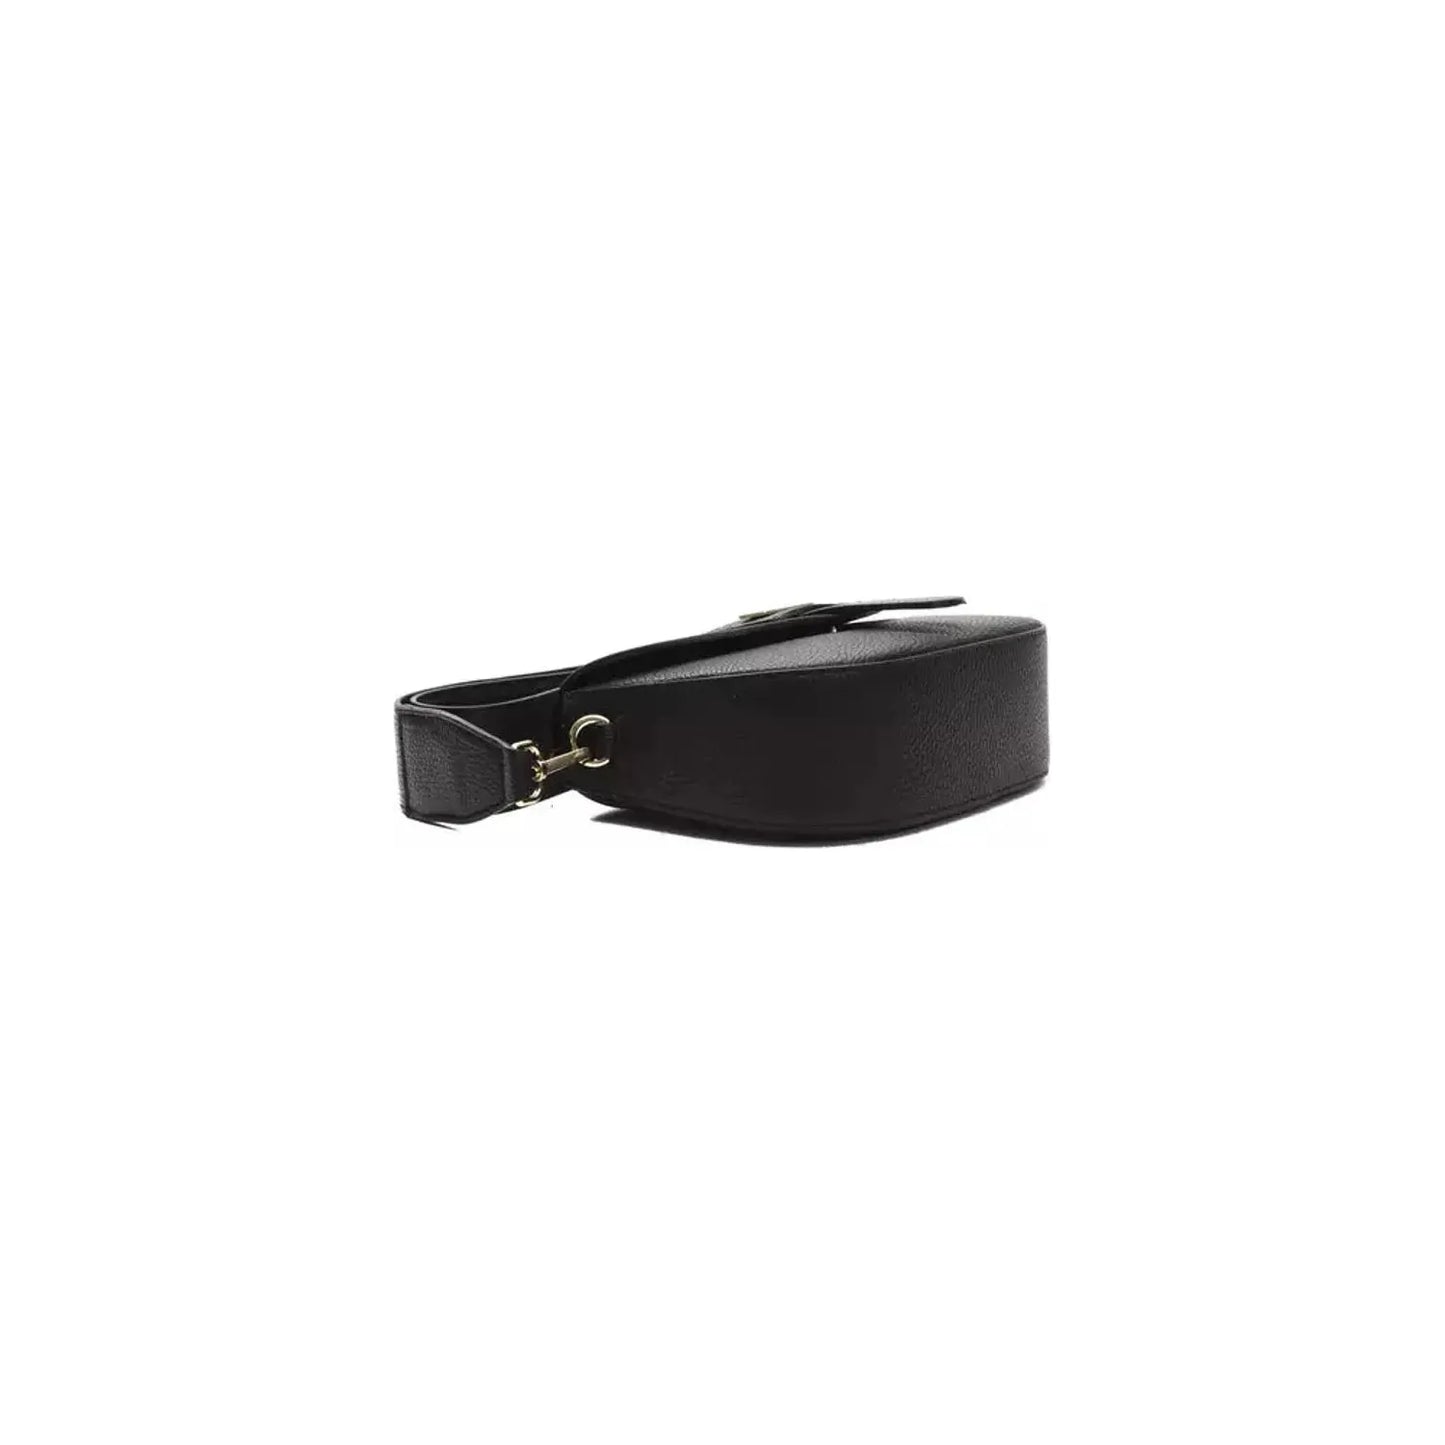 Pompei Donatella Elegant Black Leather Crossbody Bag black-leather-crossbody-bag-1 Crossbody Bag stock_product_image_5809_835704254-23-25a181ce-fff.webp